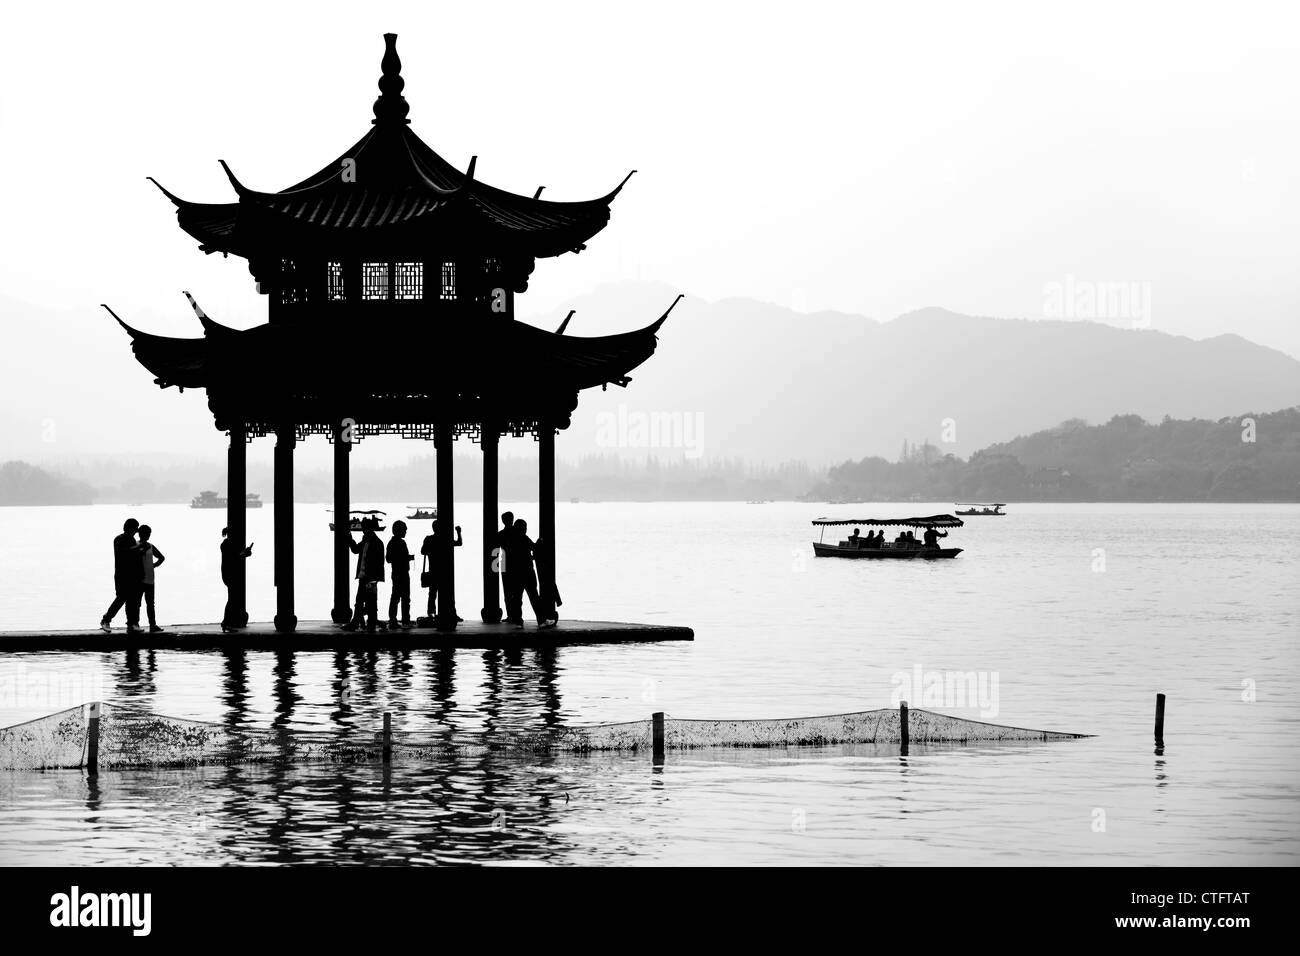 Chinese pavilion in silhouette, Hangzhou,China. Stock Photo